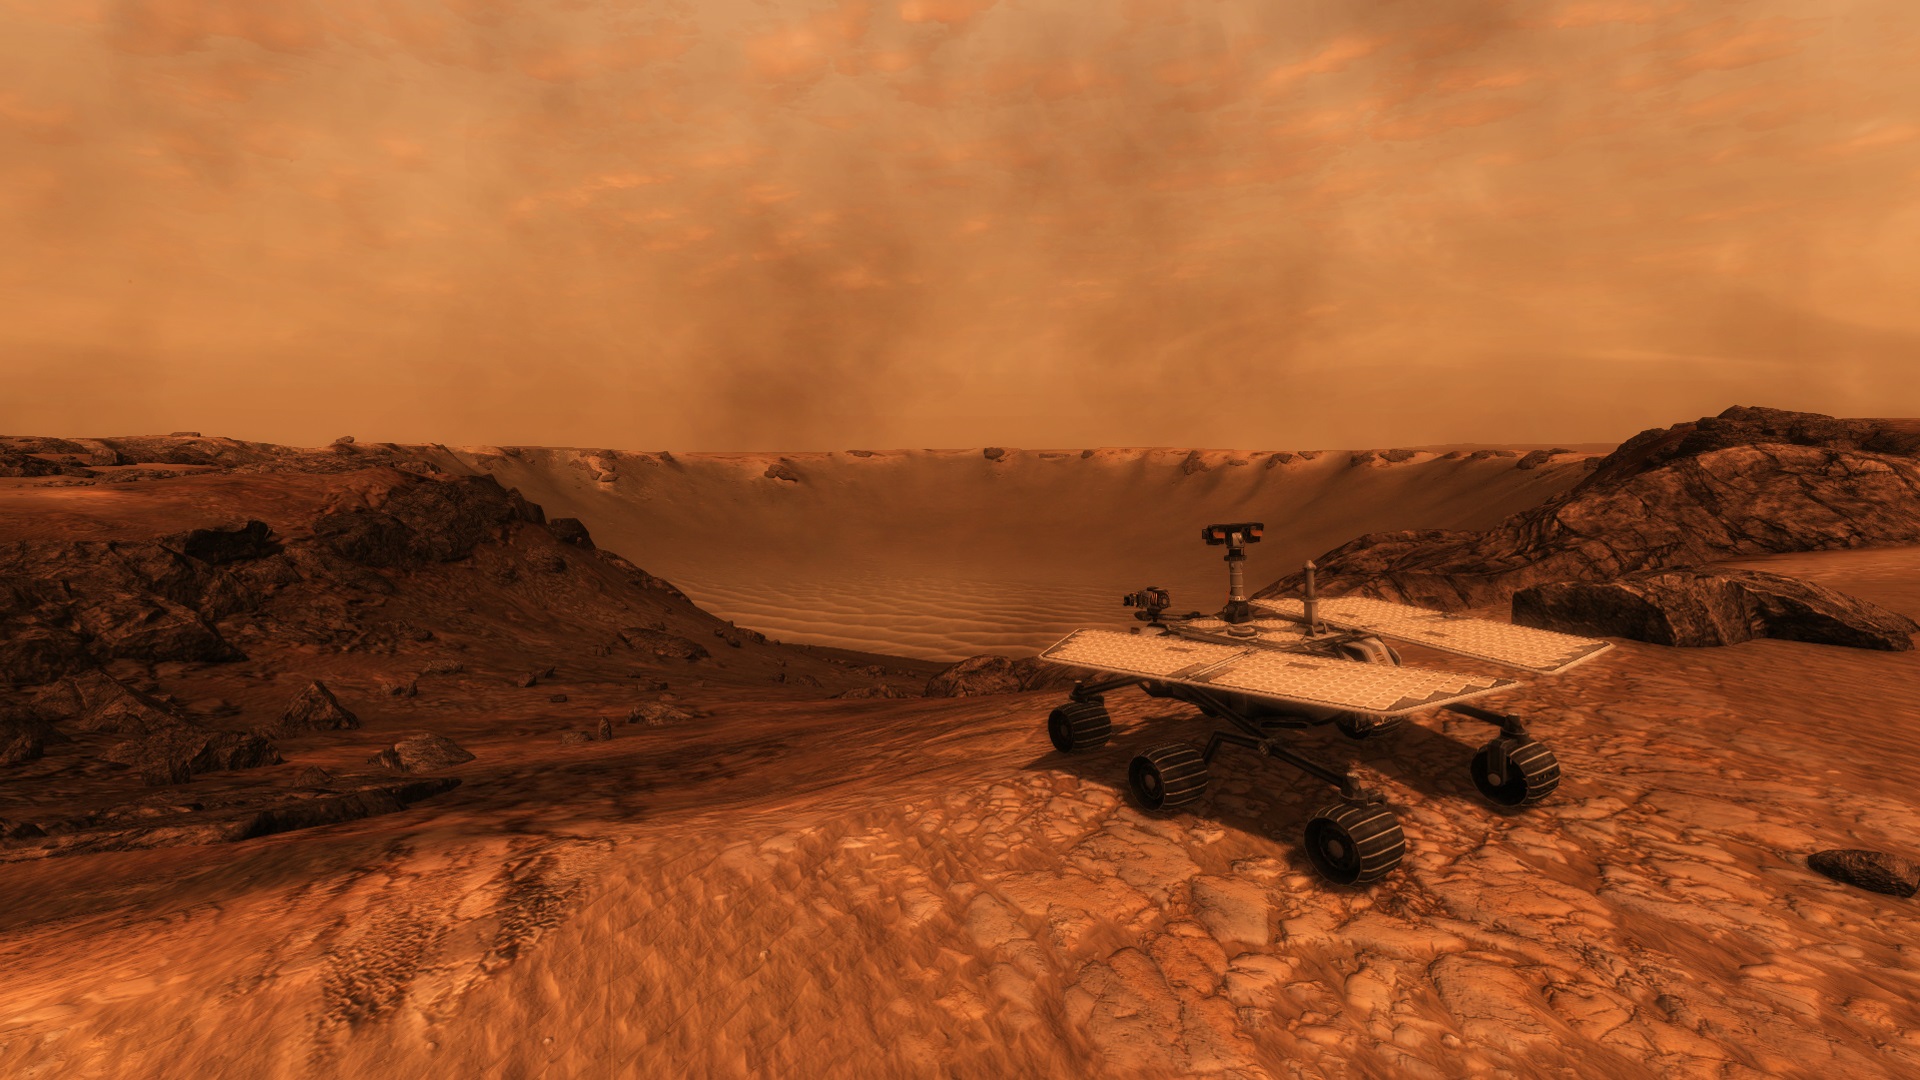 Steam で 80% オフ:Take On Mars